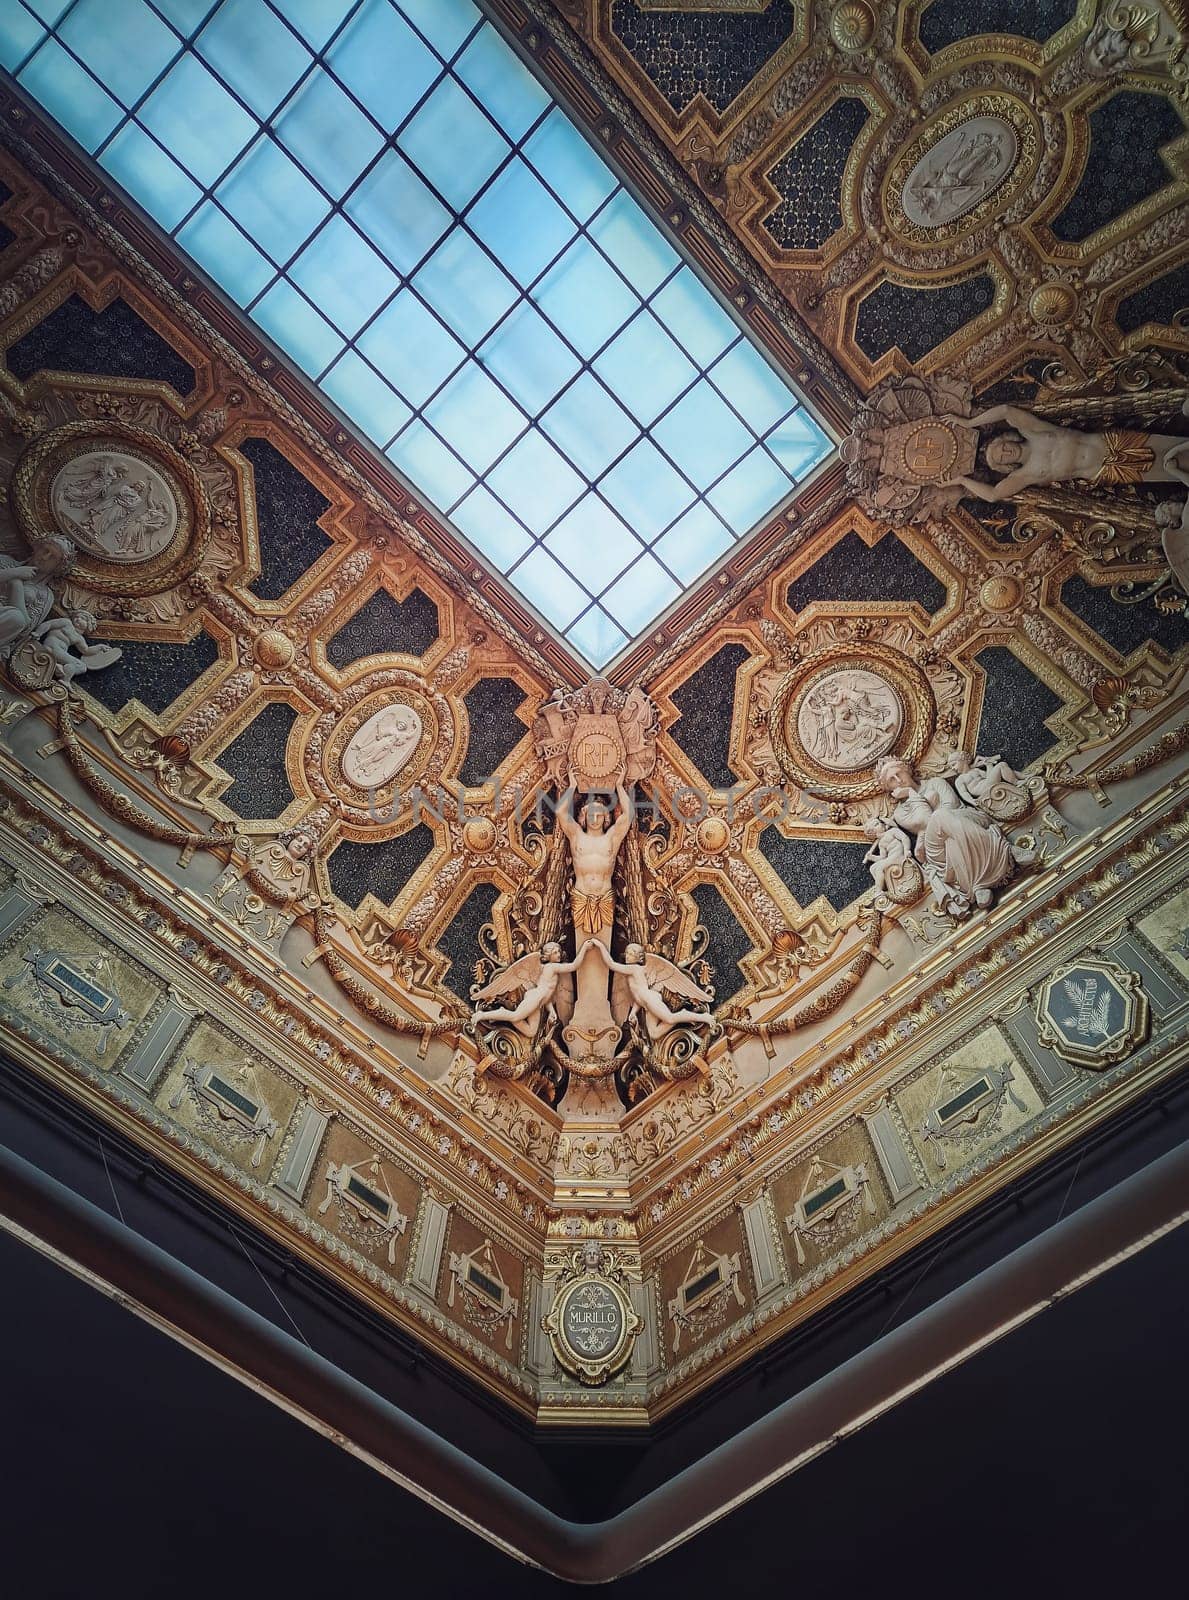 Ceiling architectural details of the Salon Carre inside Louvre museum, Paris, France by psychoshadow